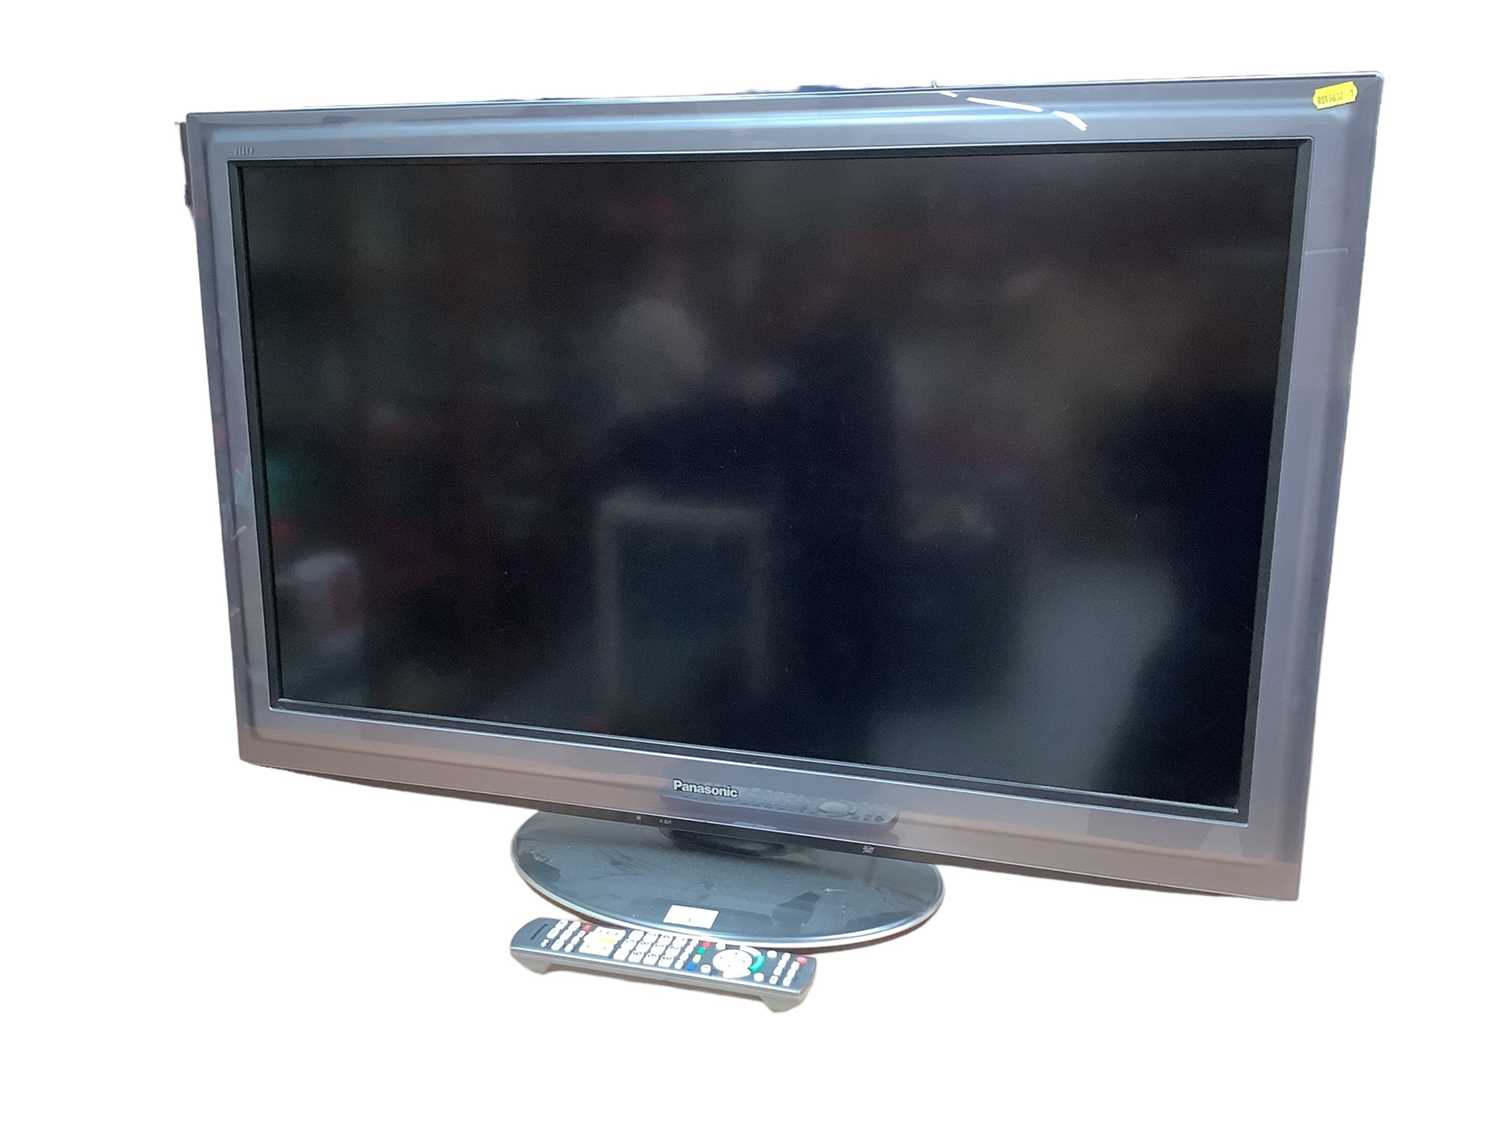 37” Panasonic Vera flatscreen television